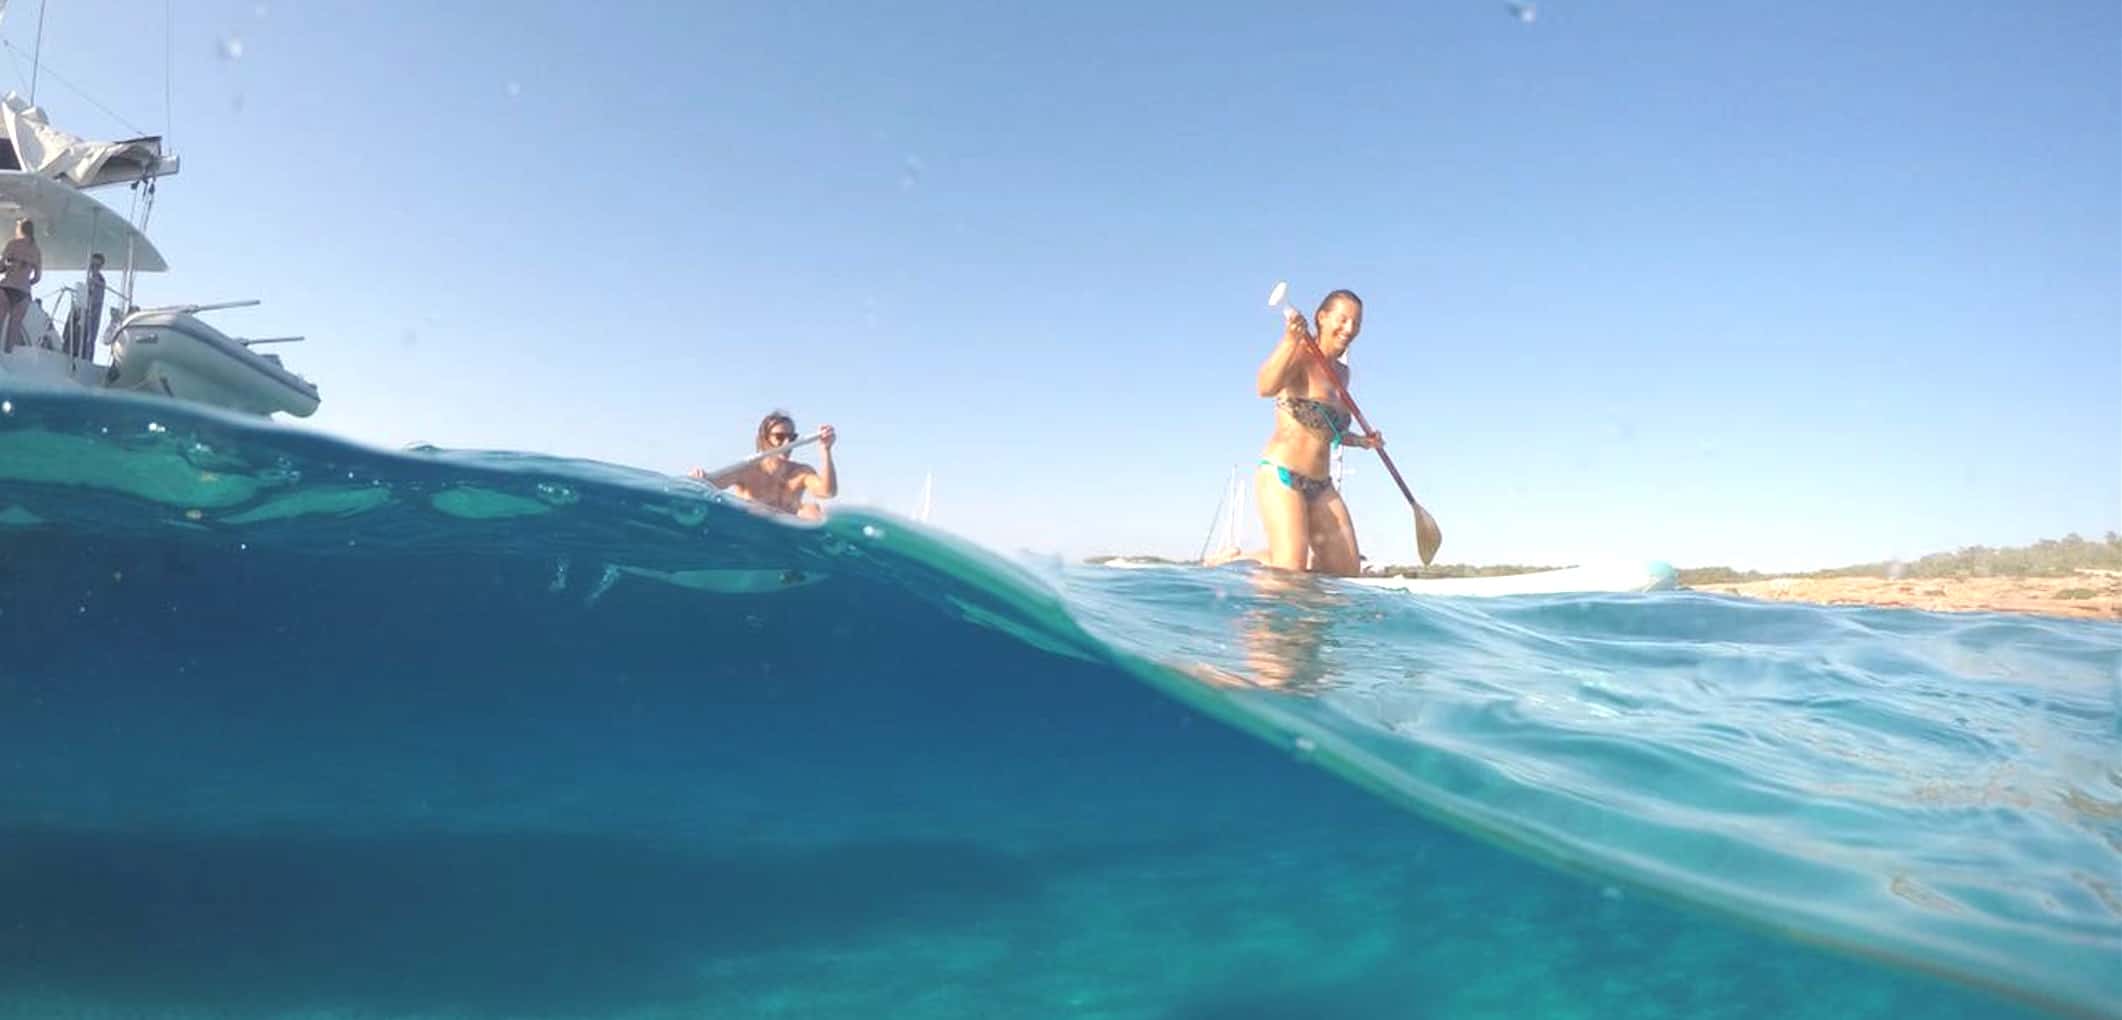 Location catamaran Ibiza, fille en Paddle surf